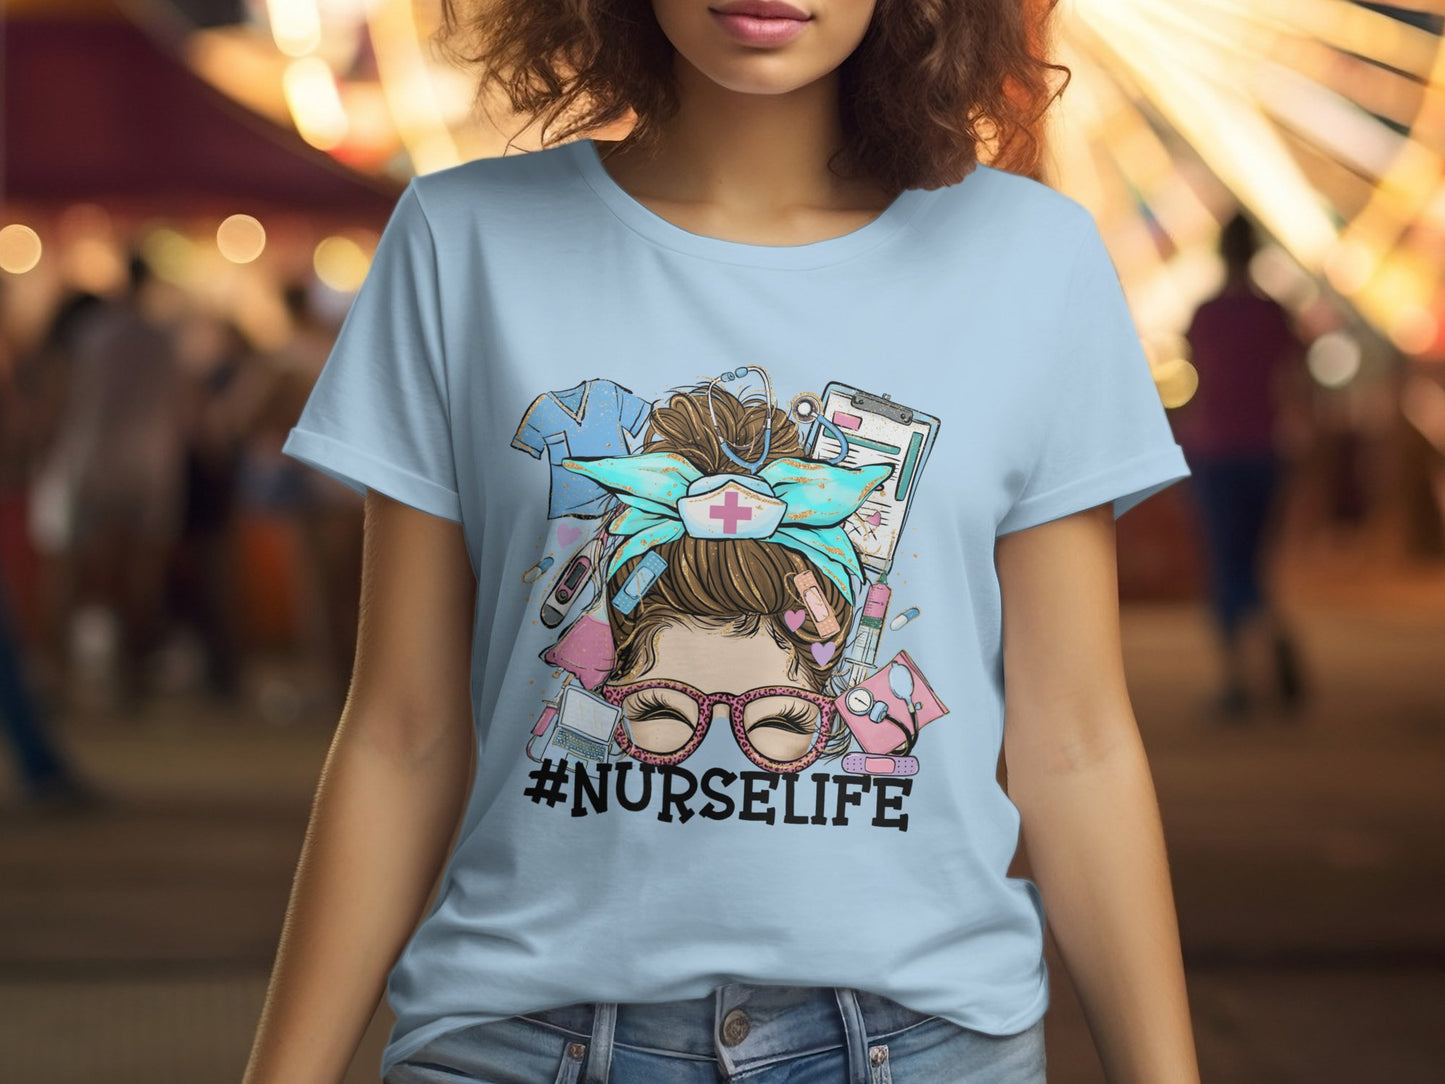 #NURSELIFE Nurse T-Shirt, Funny Nurse Shirt, Nurse Gift Idea, Nursing Appreciation Shirt, Cute Nurse Design Tee, Healthcare Worker Shirt